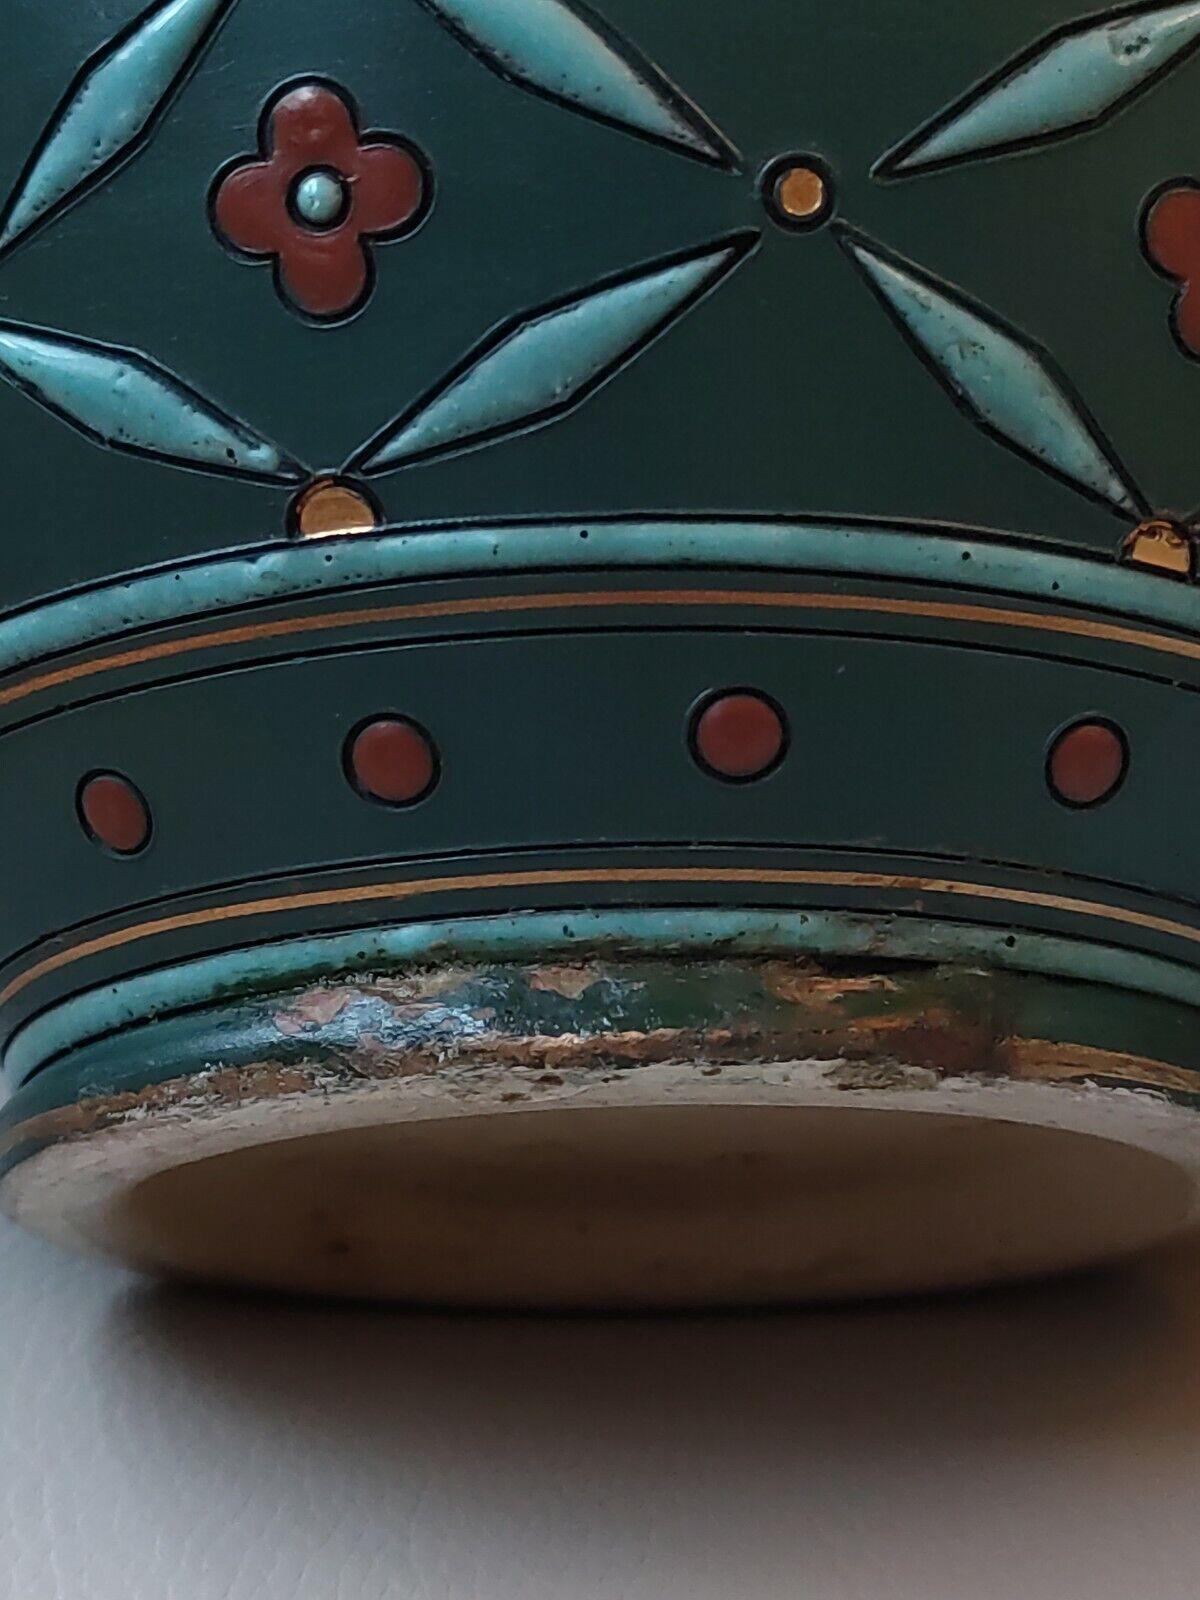 German c1900 Villeroy & Boch Mettlach Stoneware Ceramic Gilt Enamel Antique Vase - Tommy's Treasure